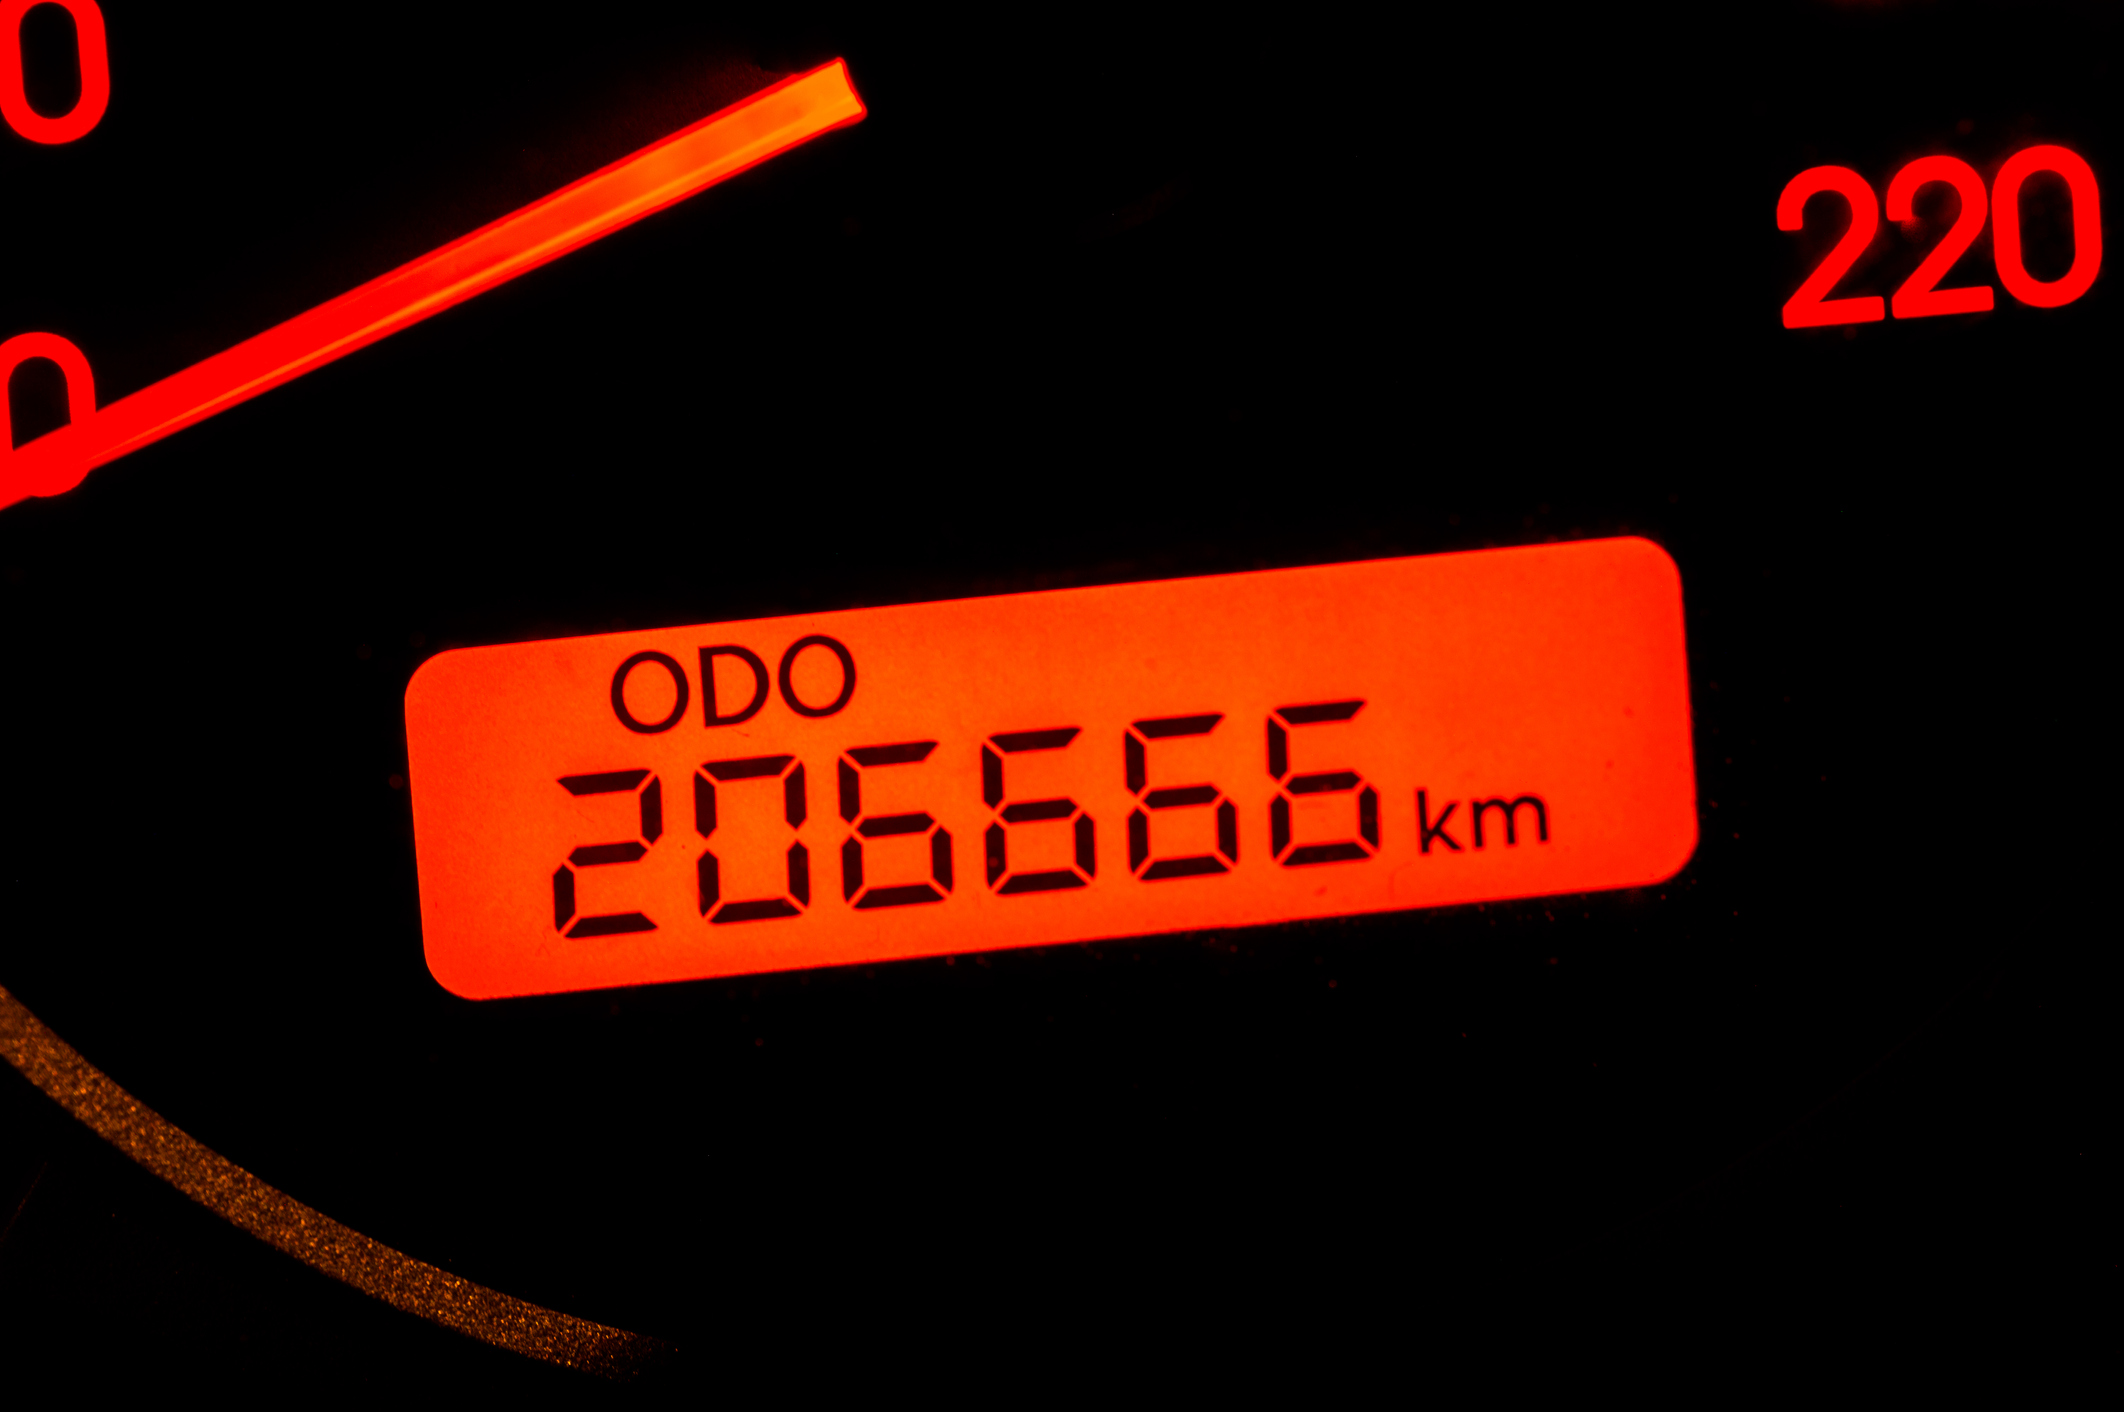 Dark dashboard with odometer showing kilometers.